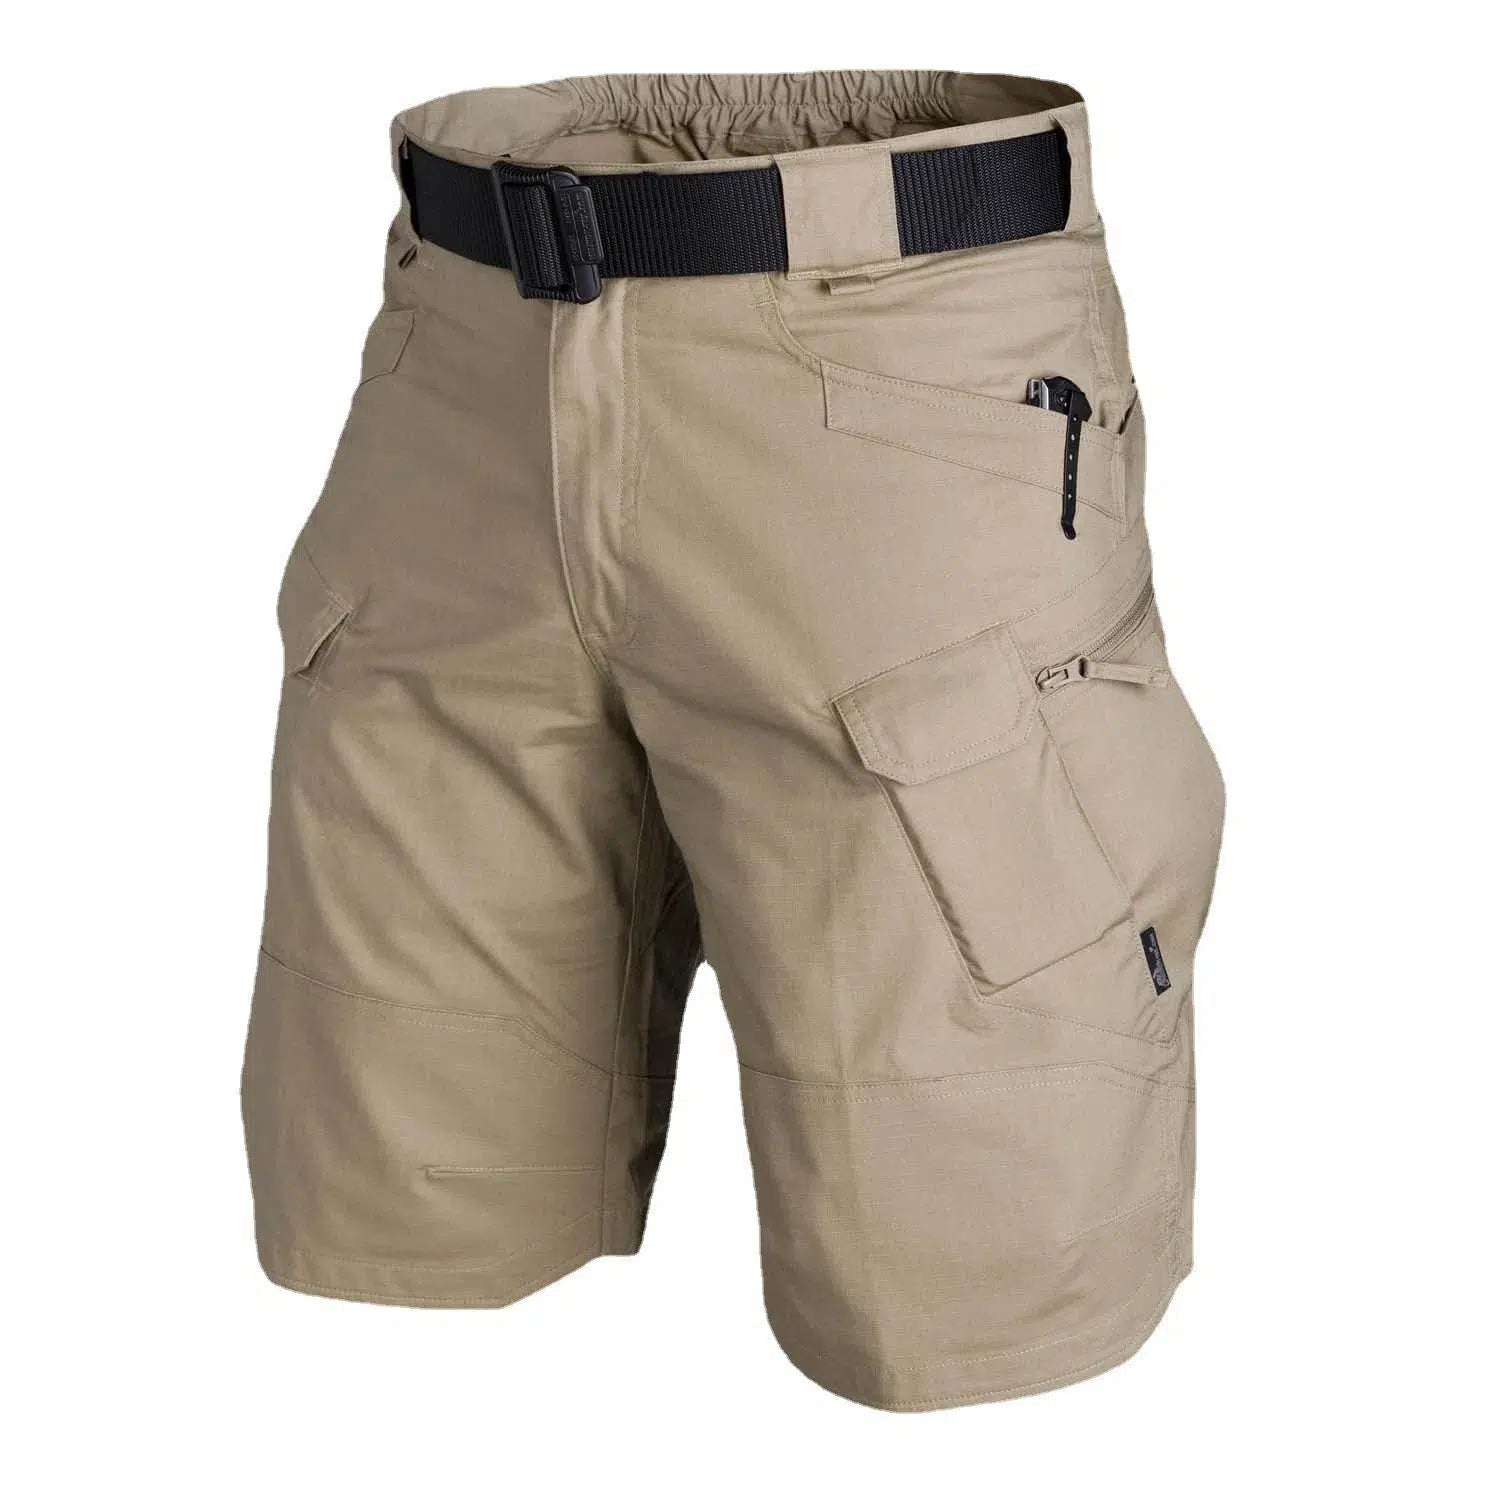 IX7 Tactical Cargo Shorts for Men - Waterproof Breathable Quick Dry (no belt)-clothing-Biu Blaster-khaki-S- Biu Blaster